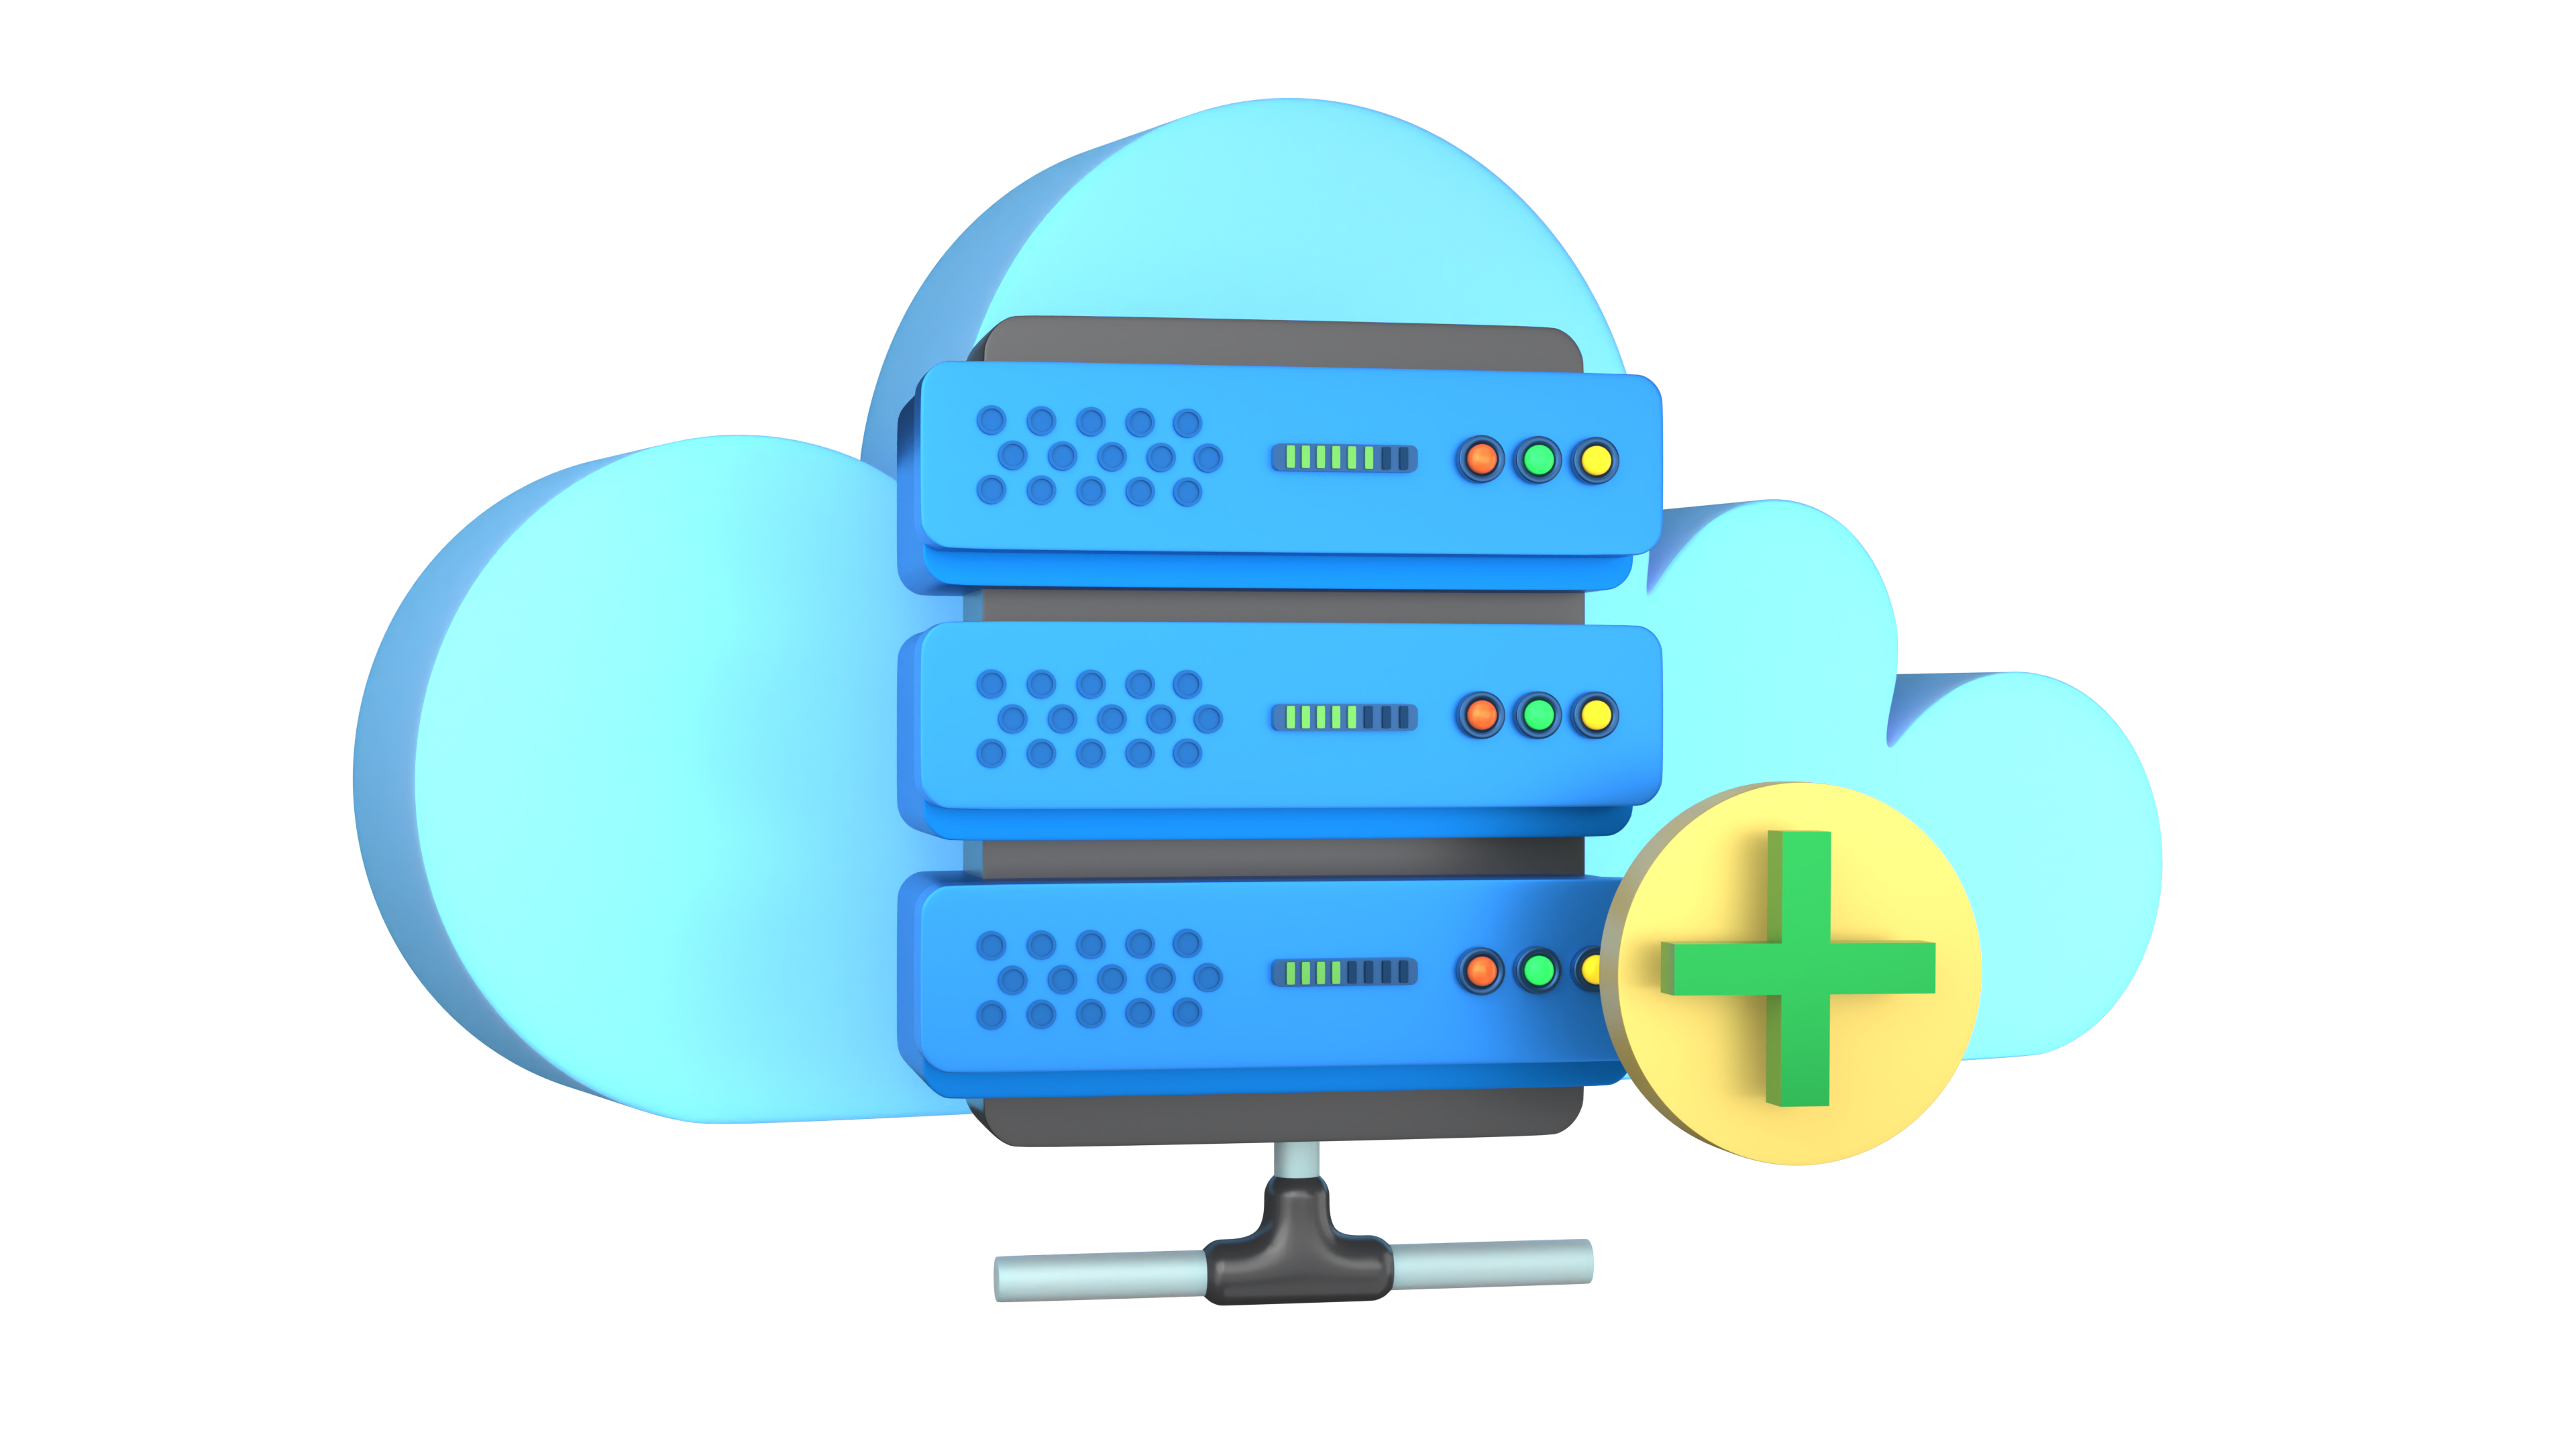 MDD Locate cloud servers image